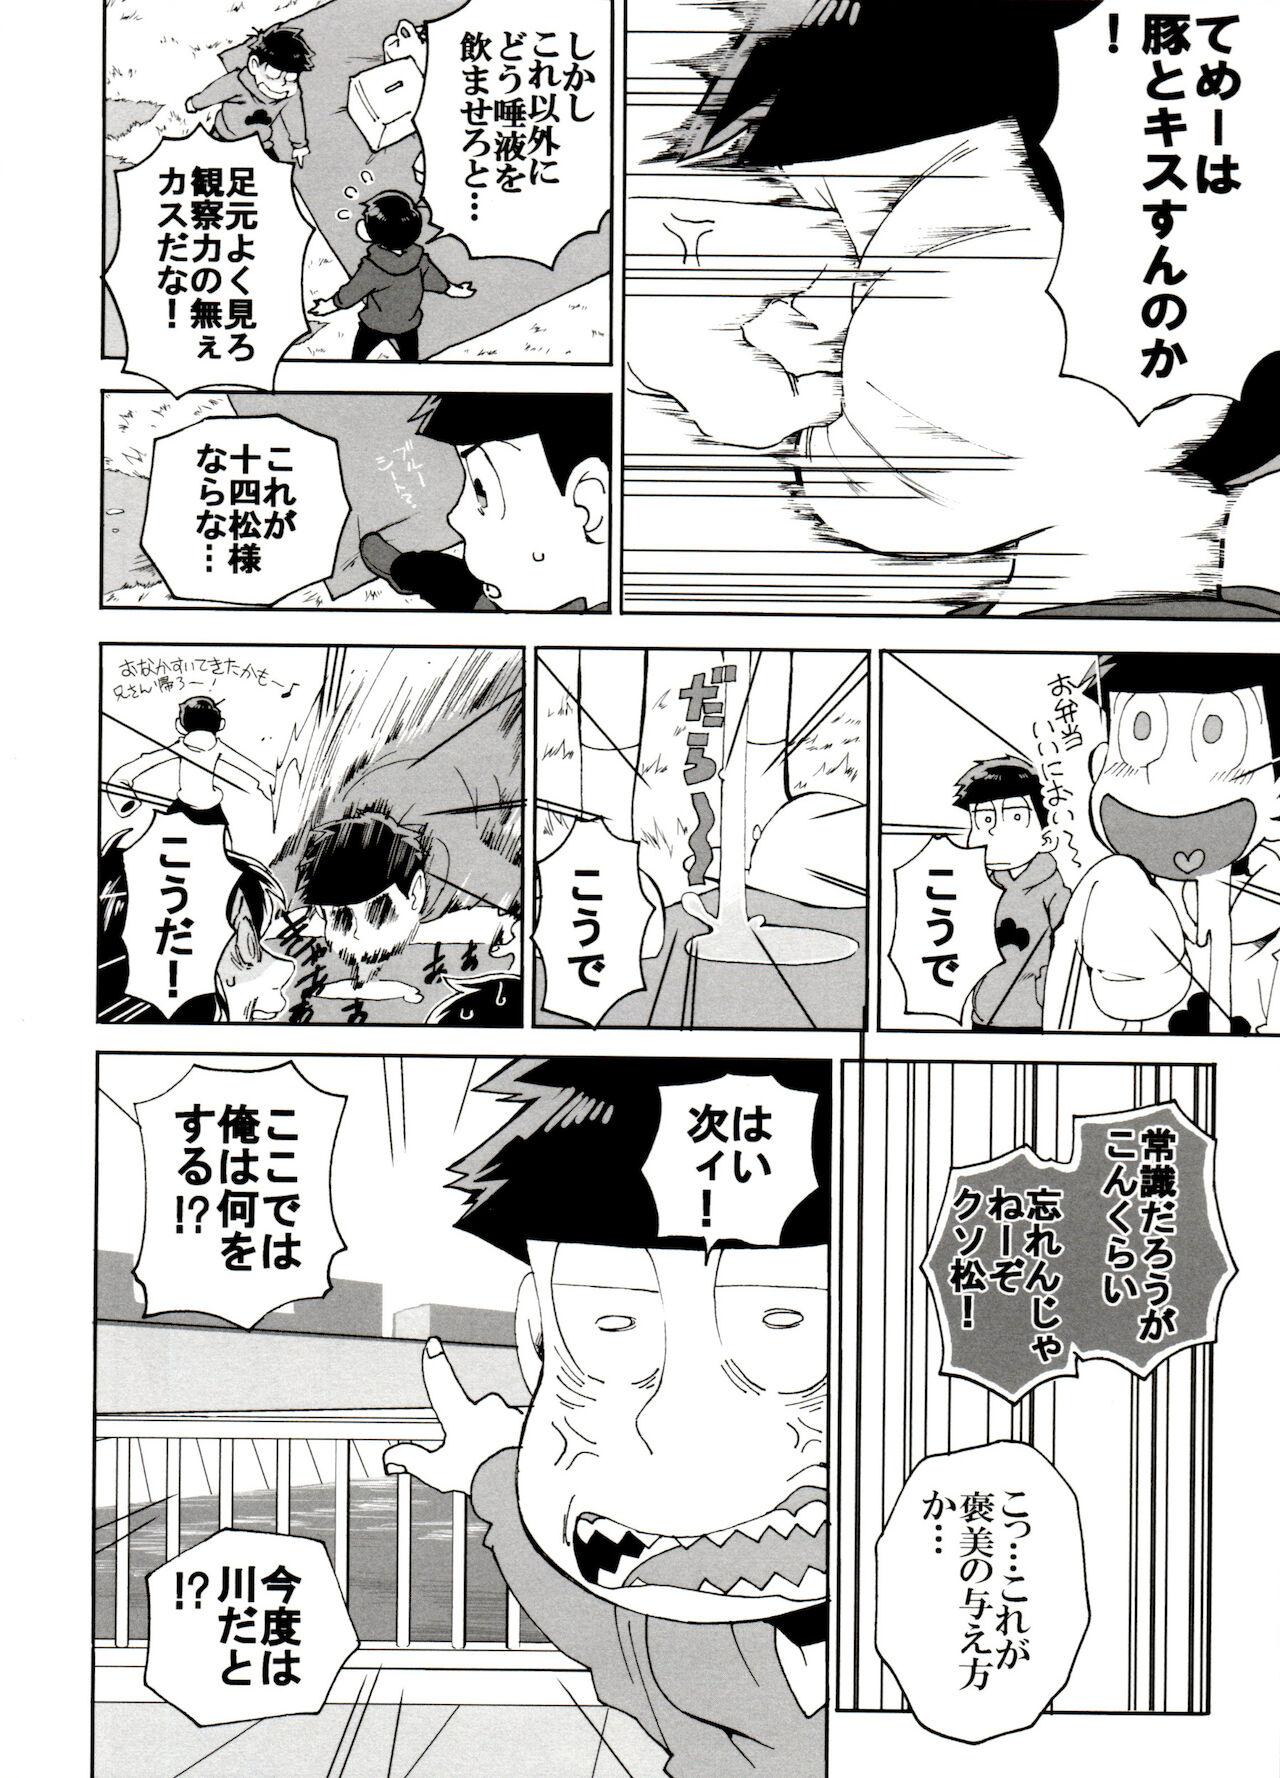 Bubblebutt SM Matsu 2 - Osomatsu-san Pegging - Page 10